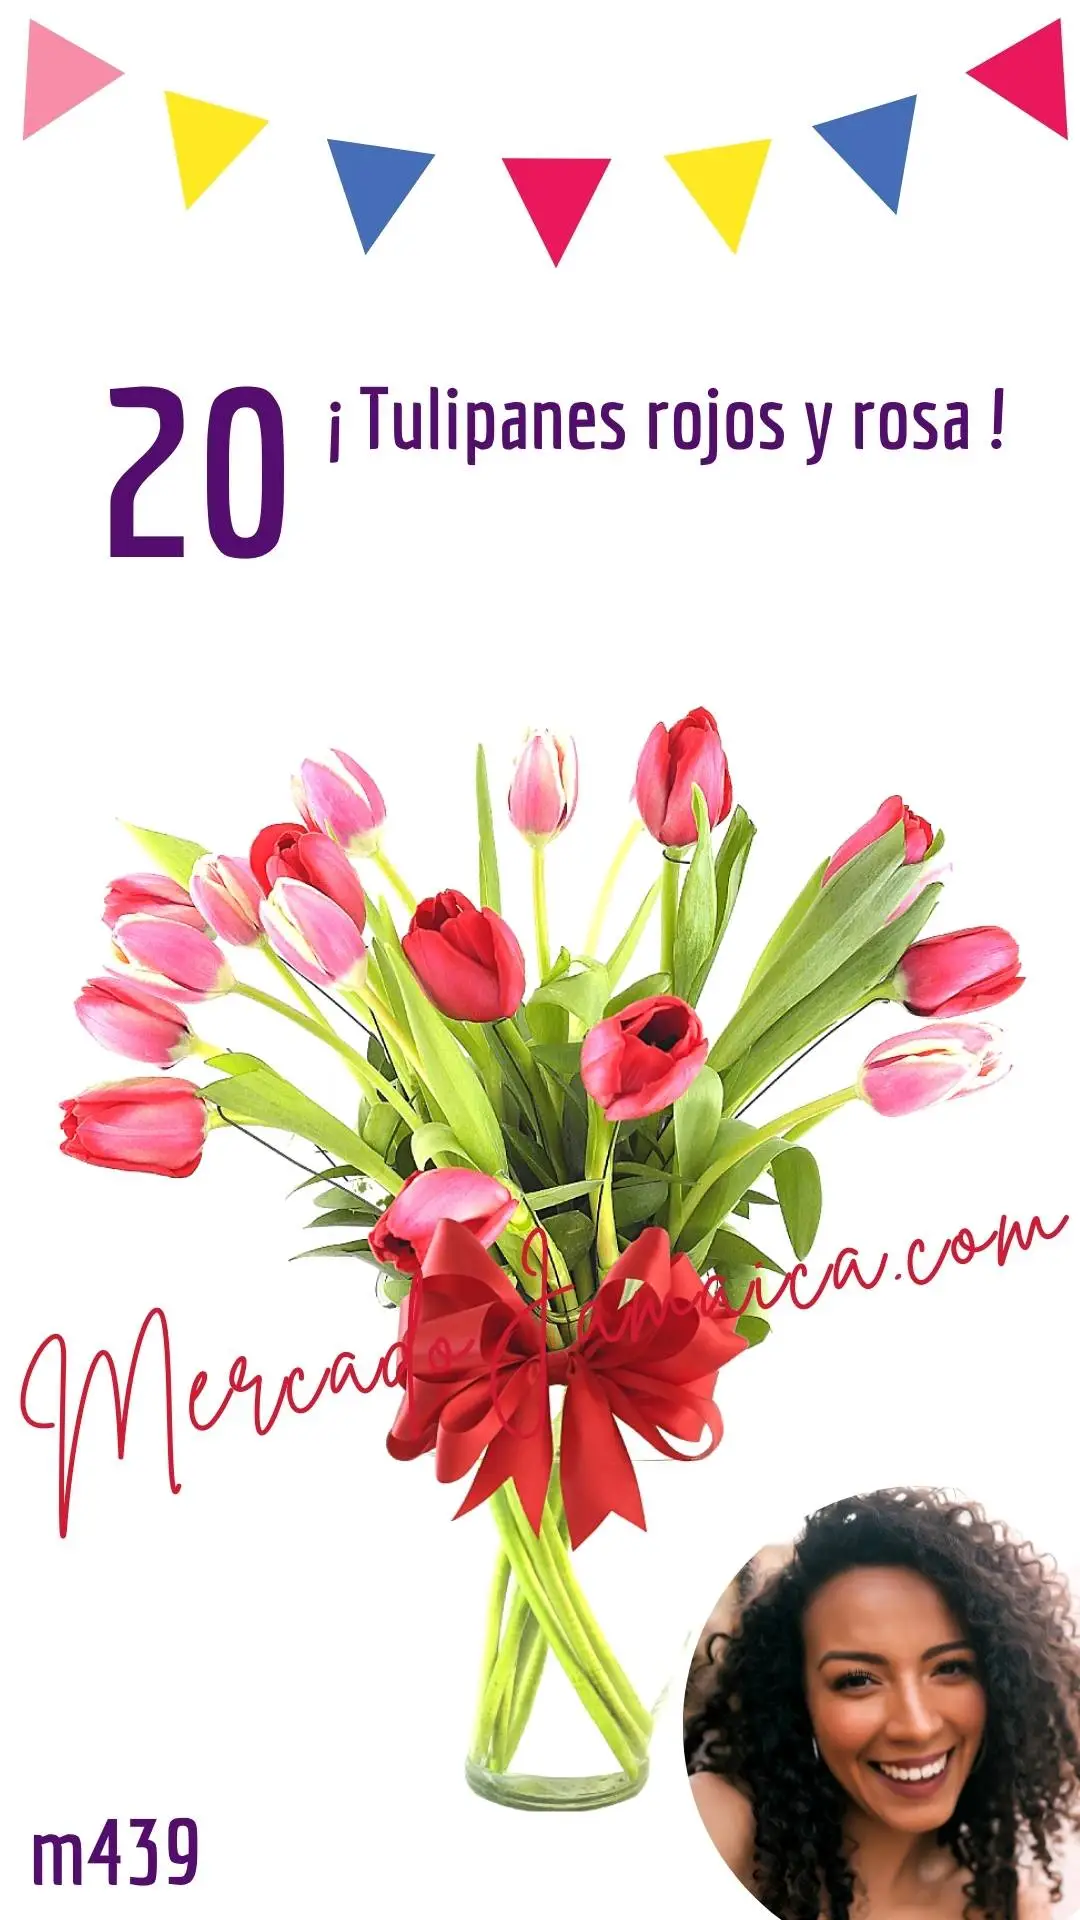 Flores Mexico df Tulipanes Picasso 20 Tulips !